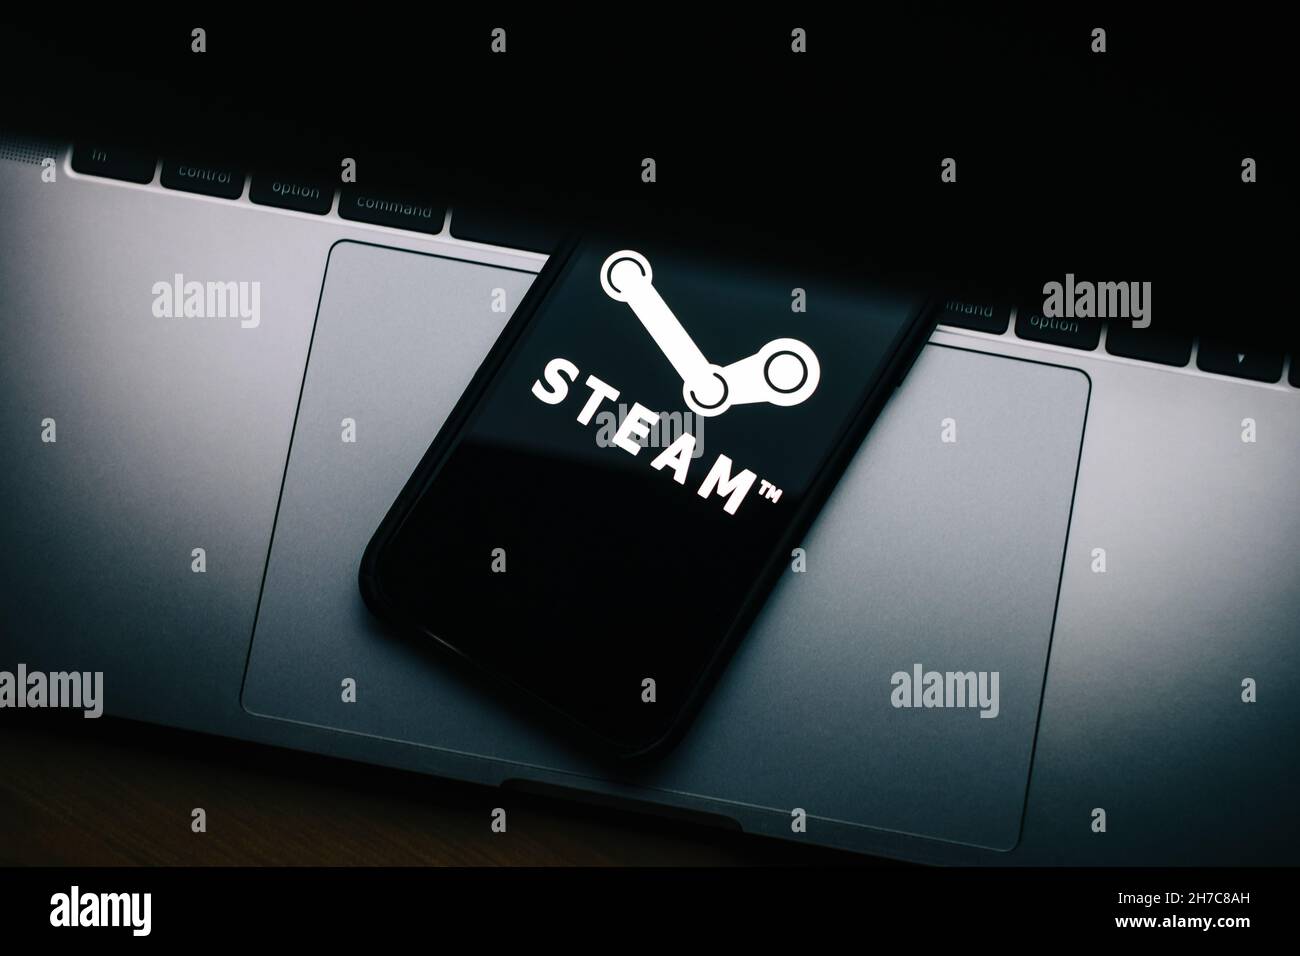 Steam logo on the smartphone screen. Stock Photo